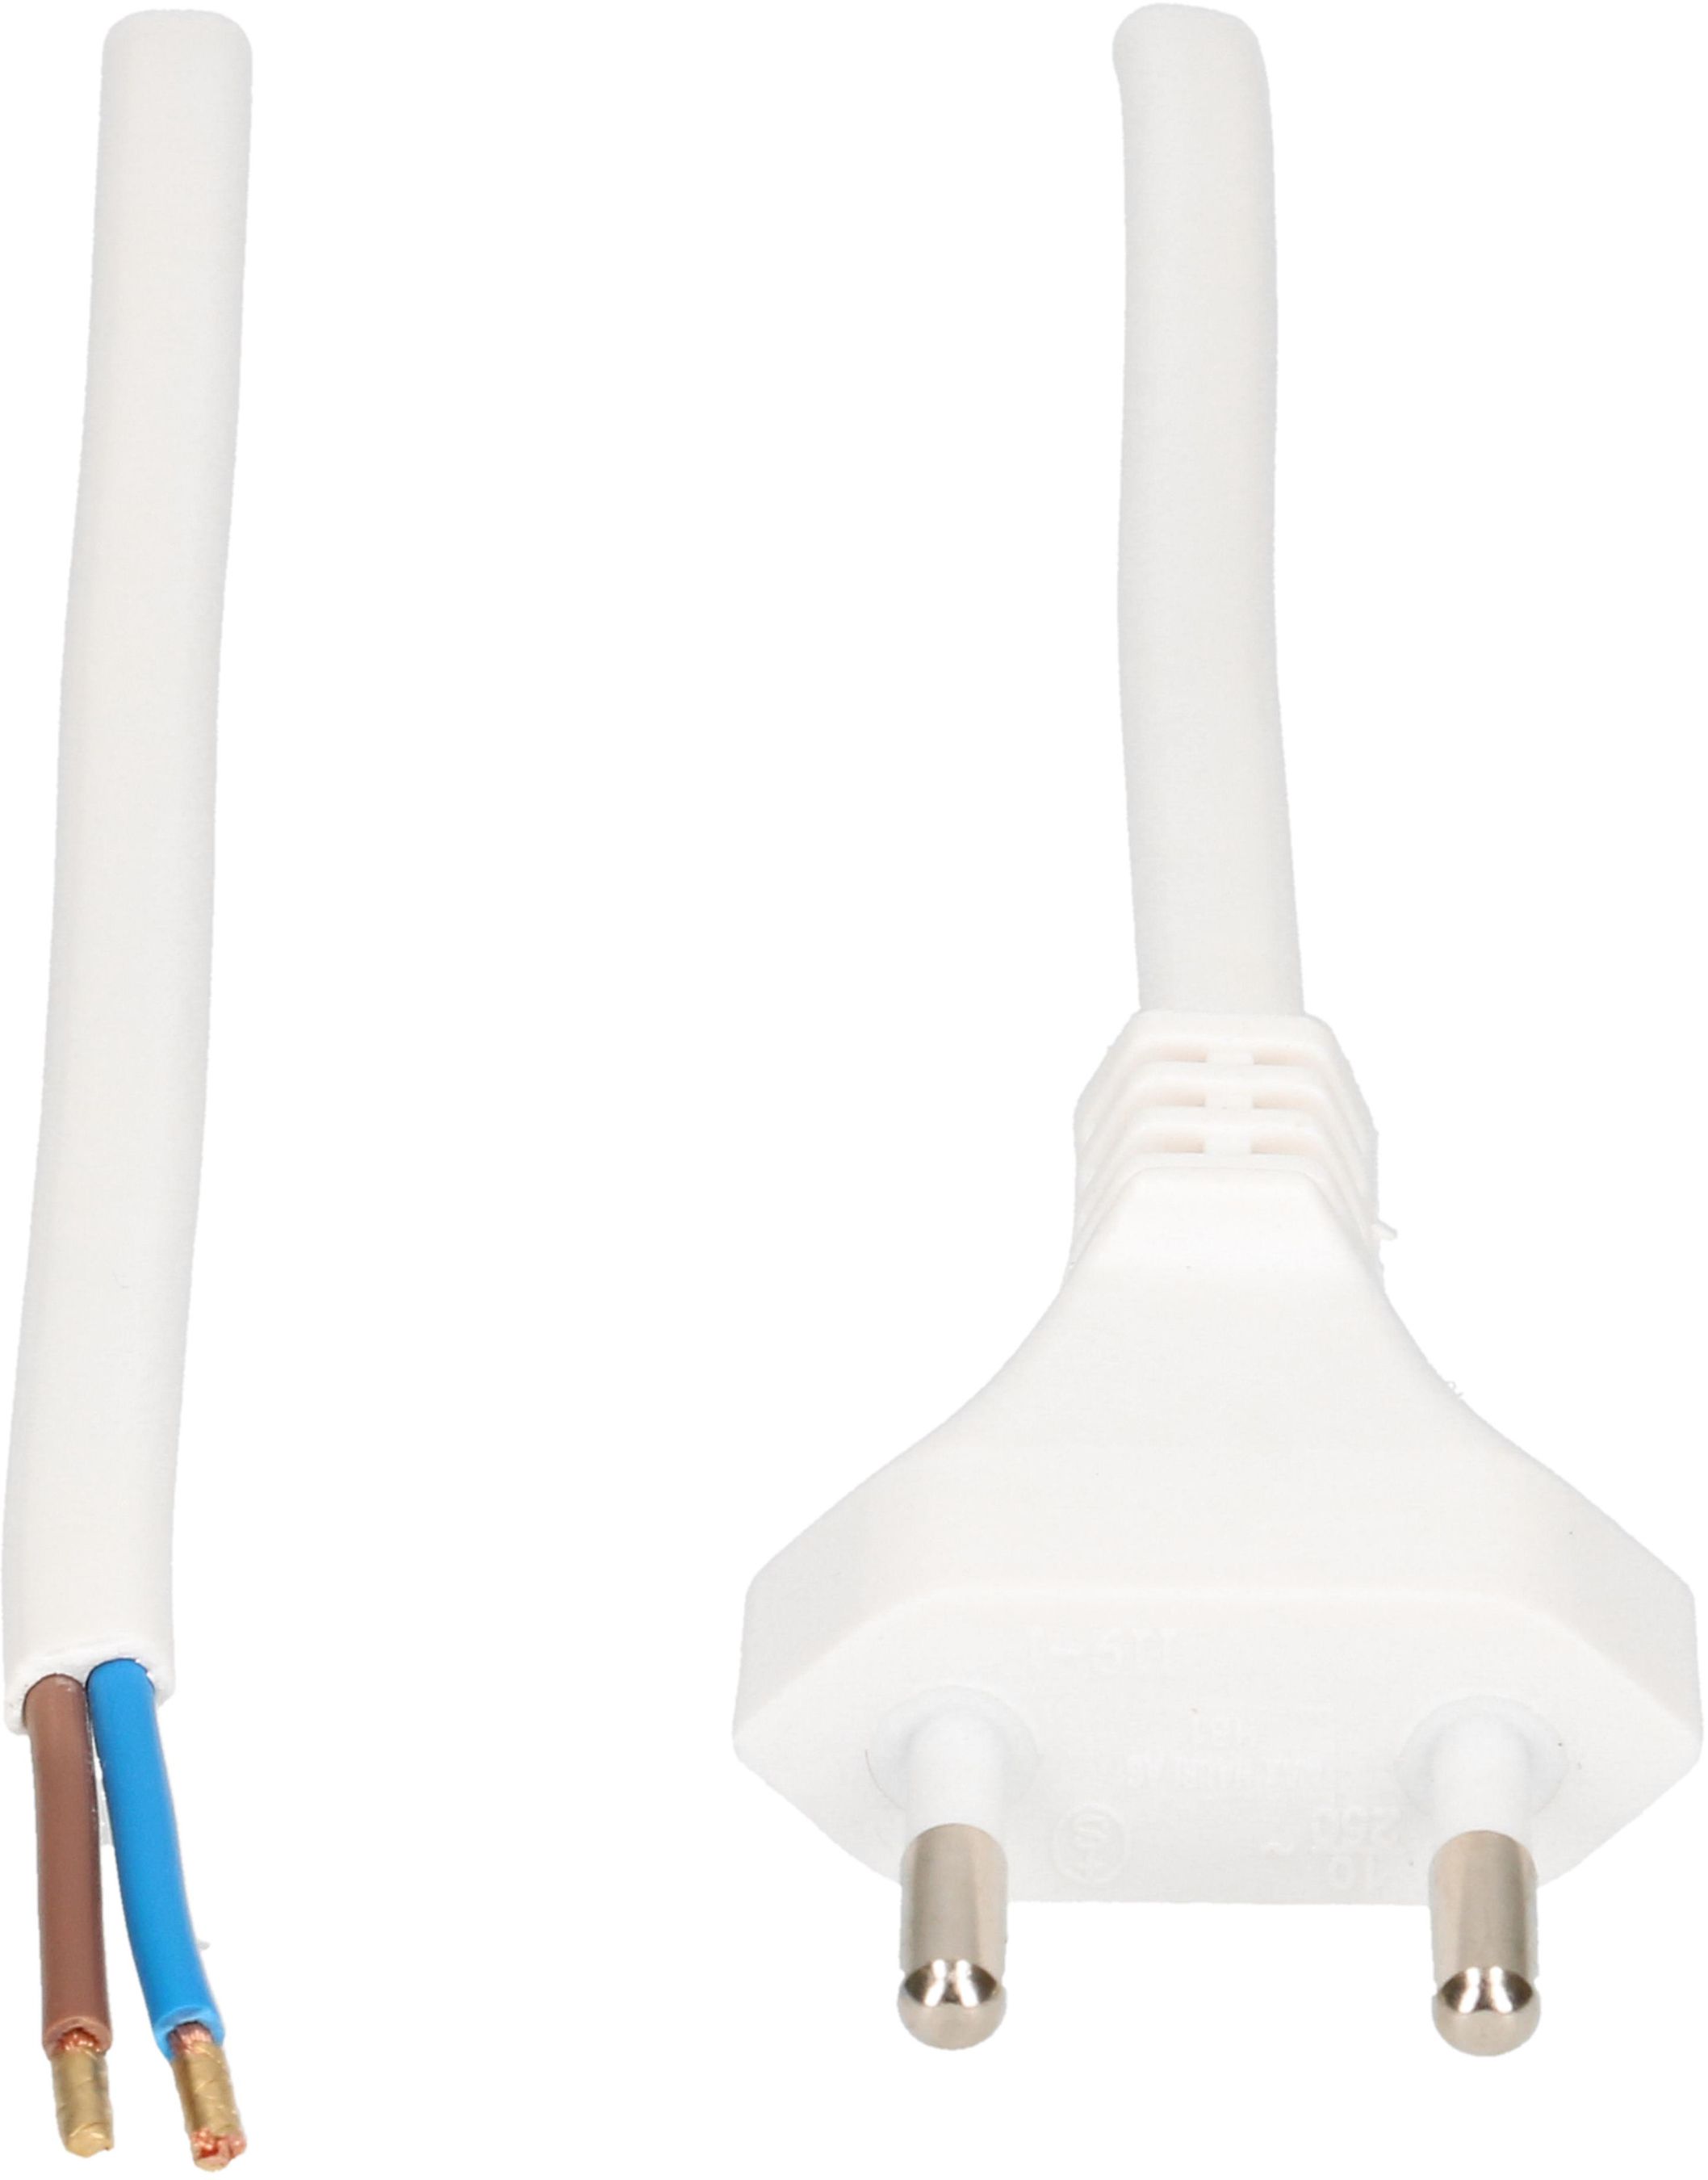 TDF câble secteur H05VVH2-F2X1.0 2m blanc type 11